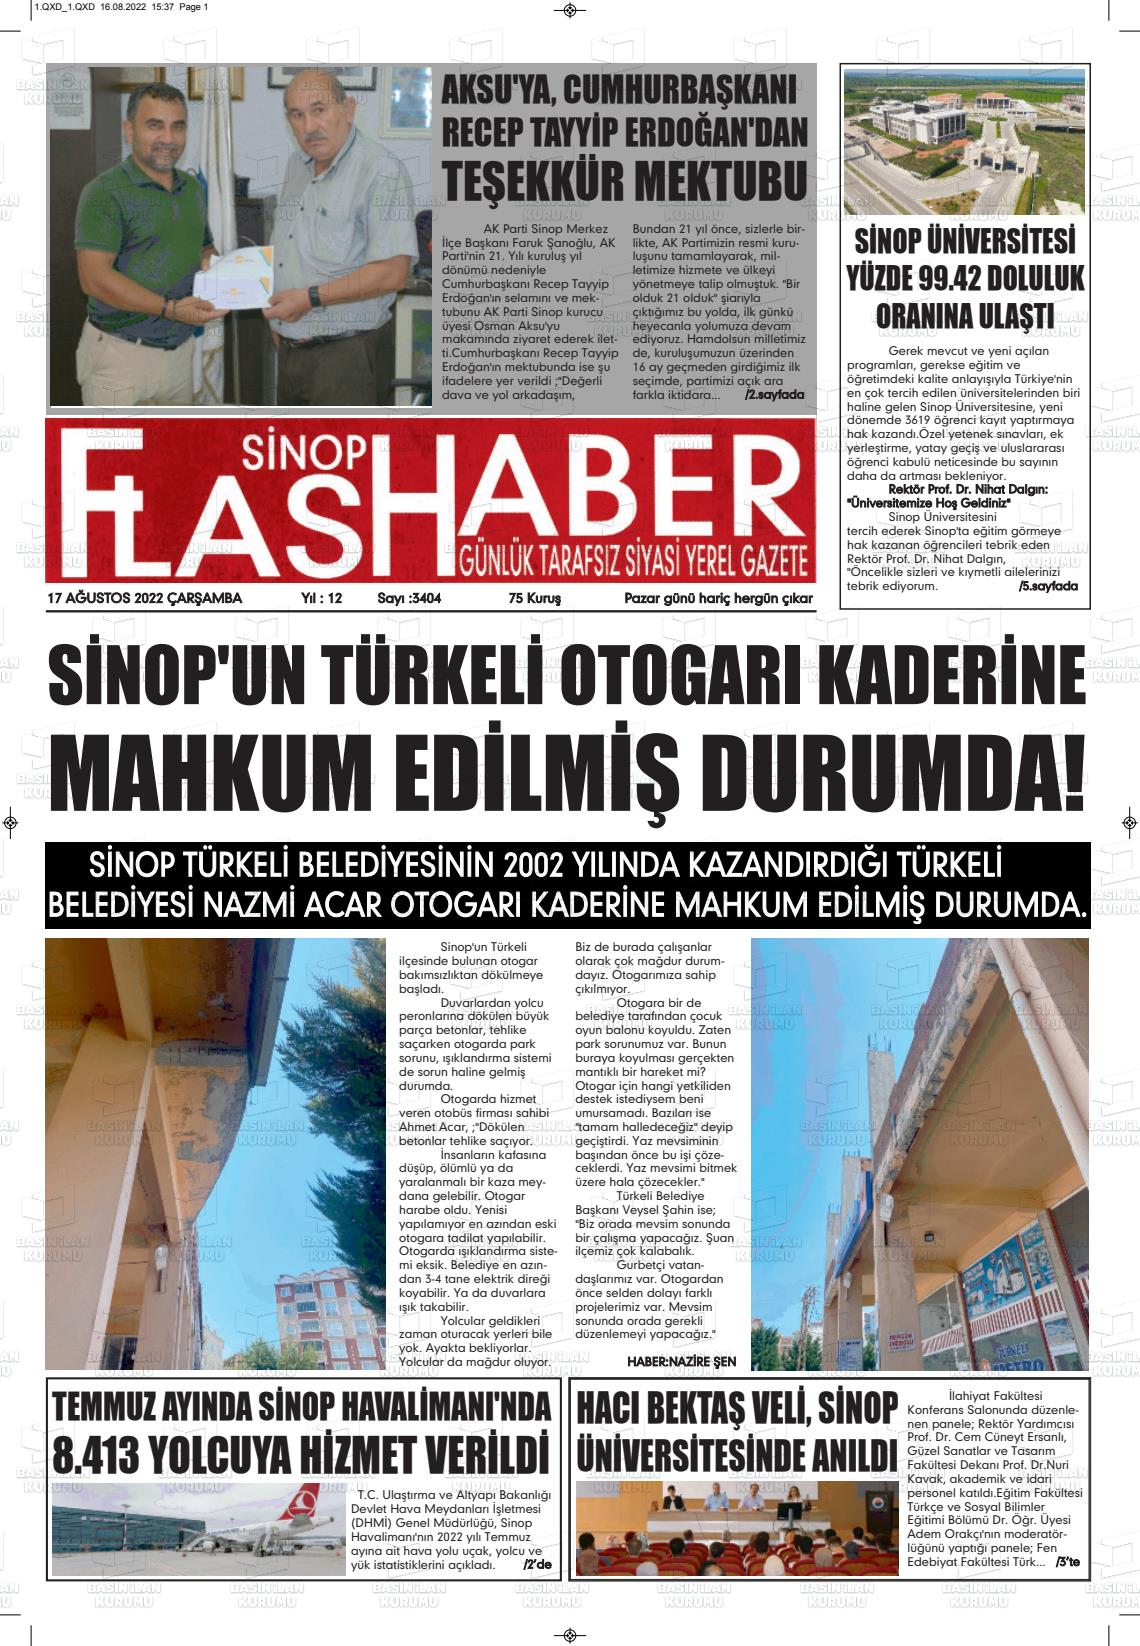 17 Ağustos 2022 Sinop Flaş Haber Gazete Manşeti